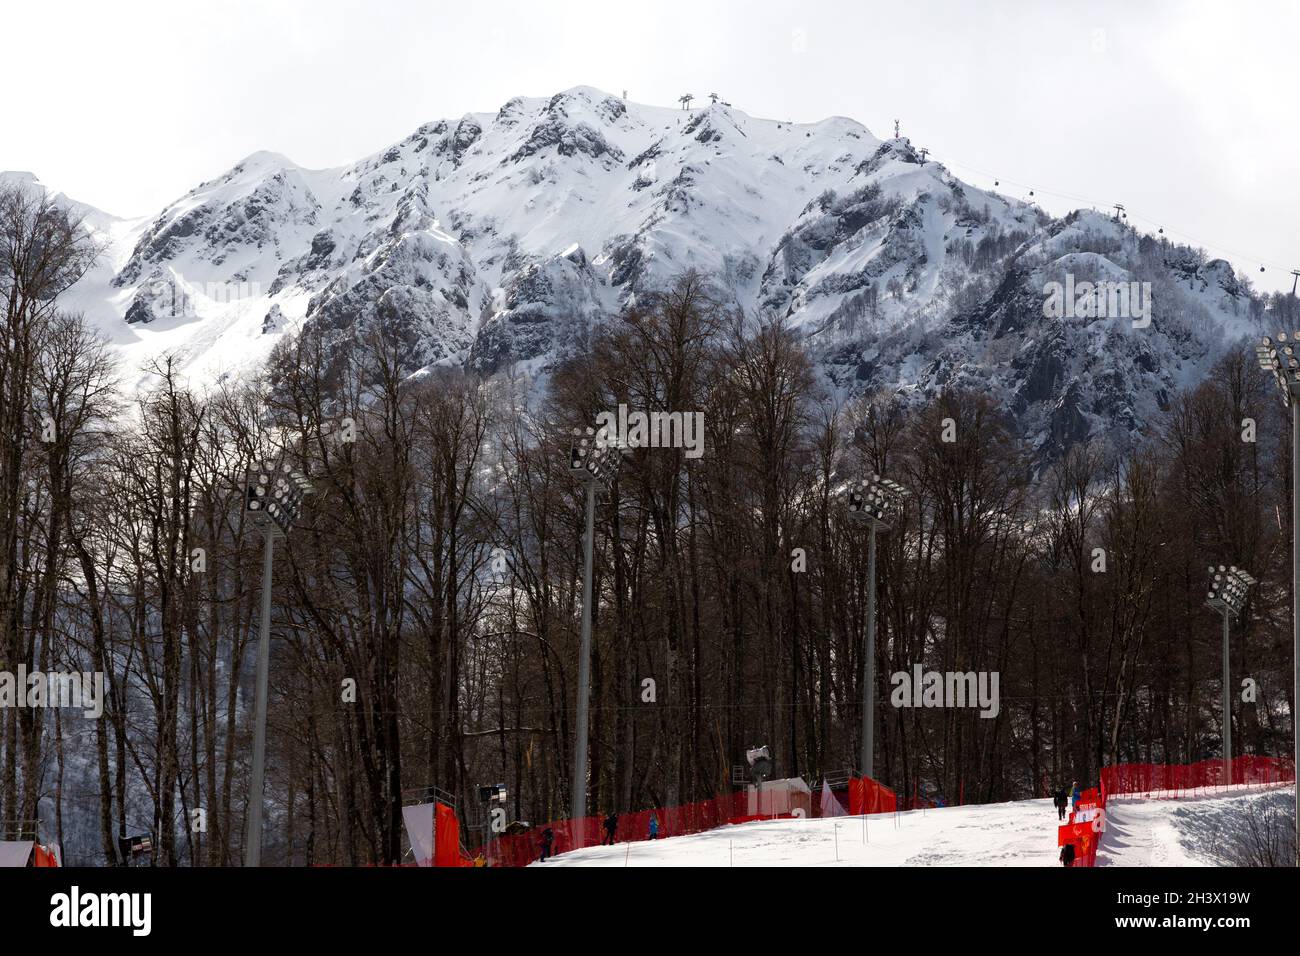 Impressive scenery of the Caucasus mountains and ski resorts in Krasnodar, Russia. Stock Photo